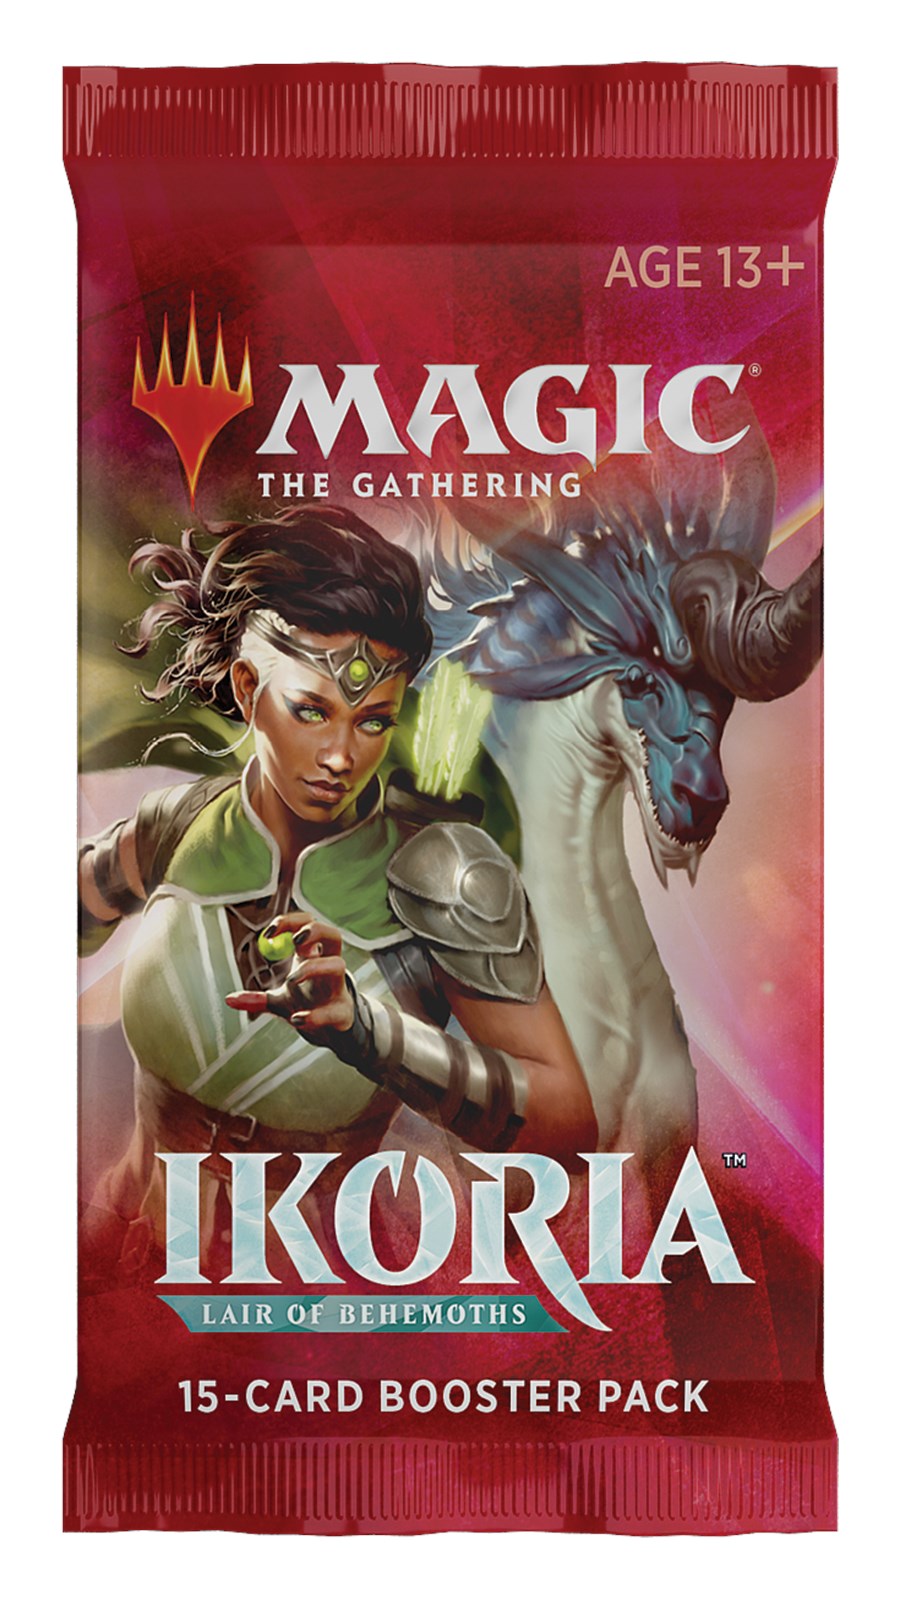 Lot of 9 Magic the Gathering Ikoria 15-Card Booster Packs 